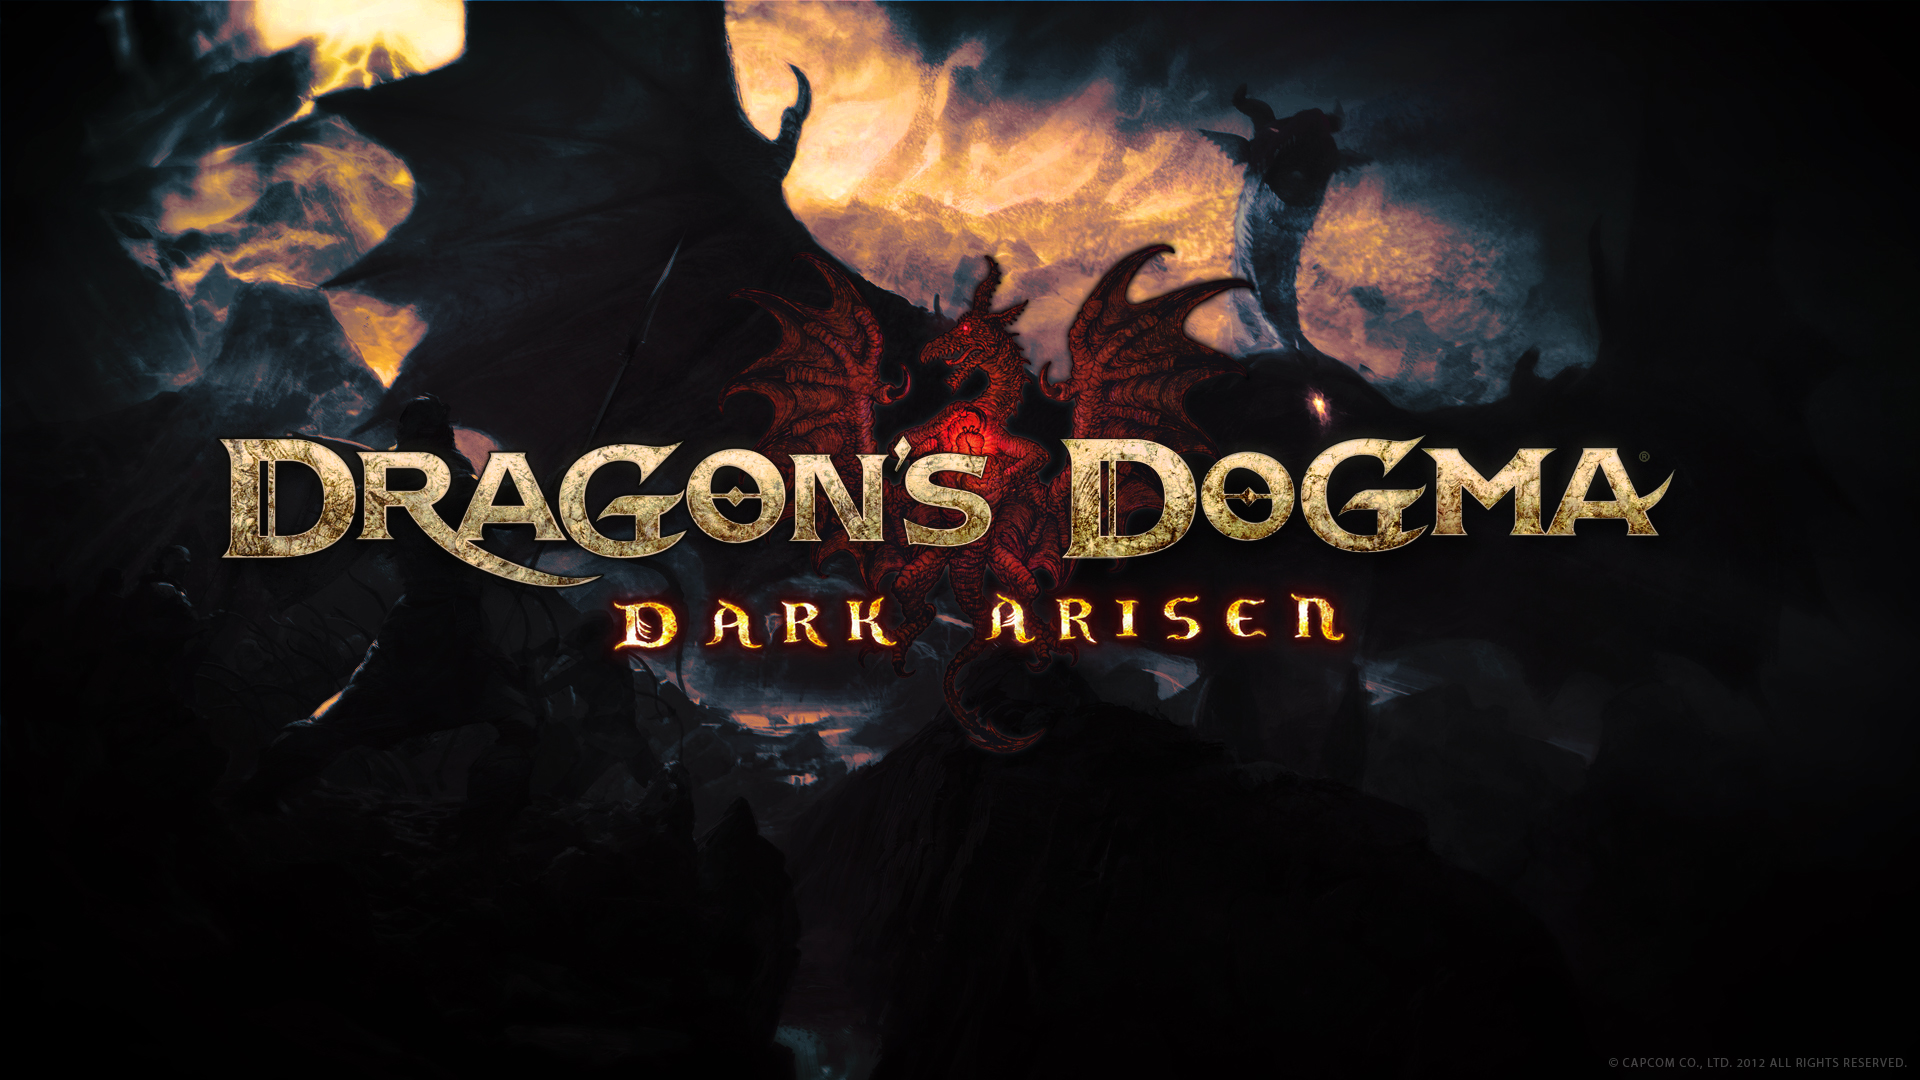 Dragon S Dogma Dark Arisen Wallpaper 3 By Christian2506 On Deviantart Images, Photos, Reviews